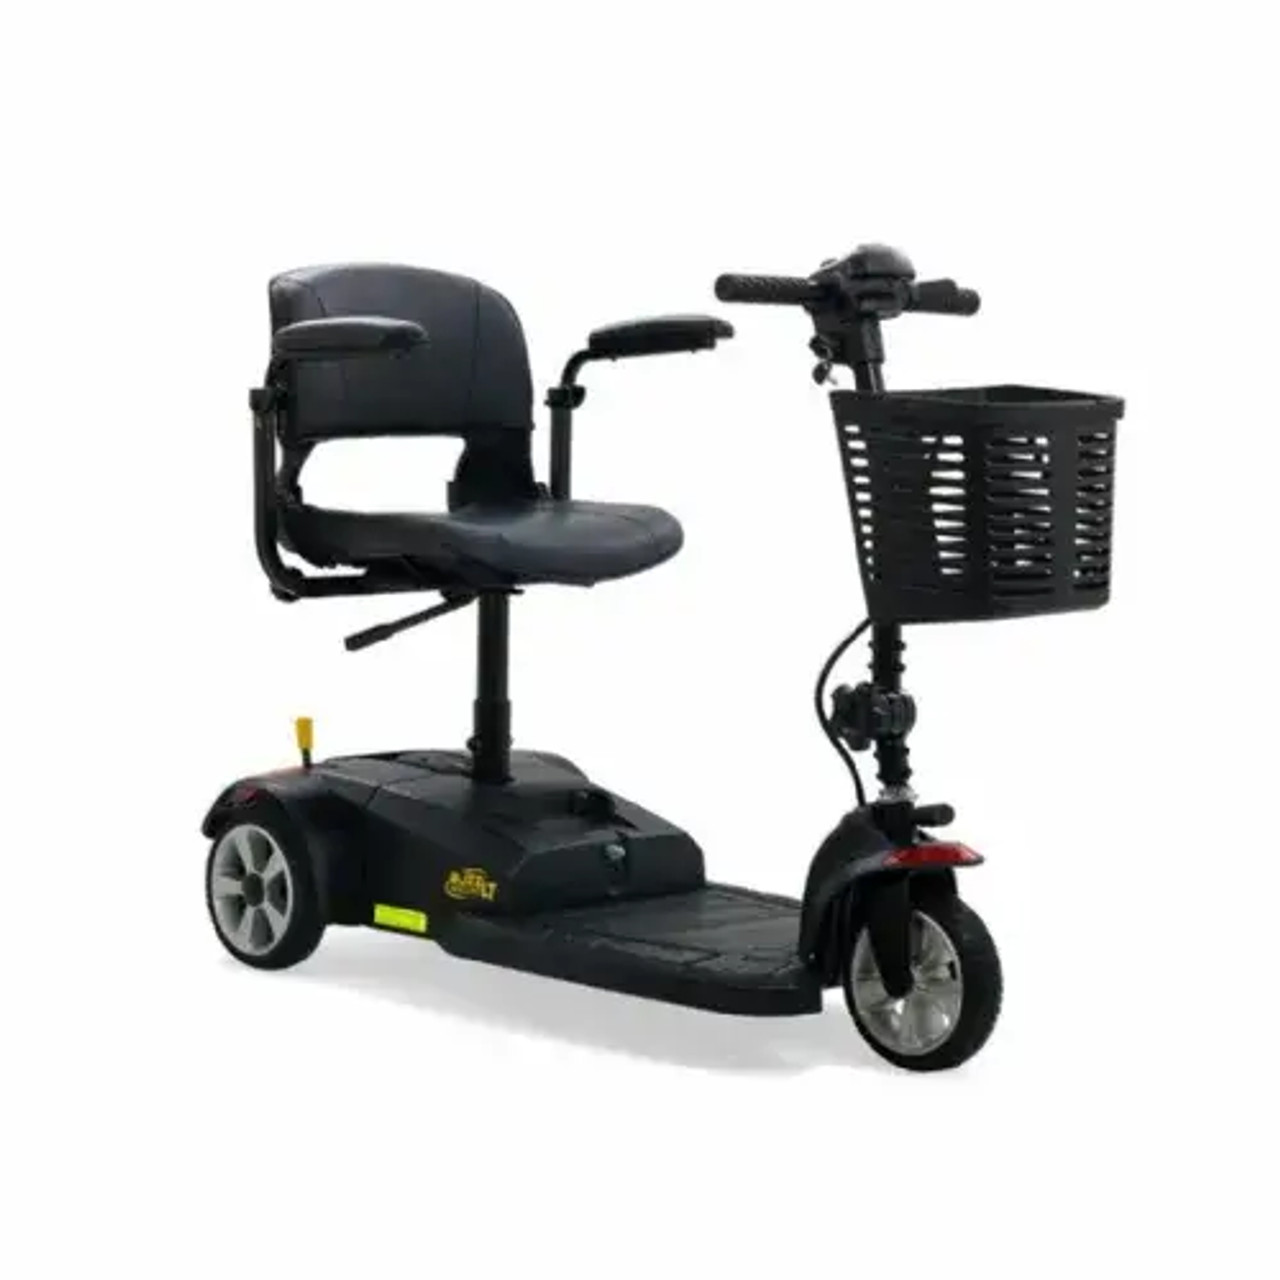 BuzzAround Lite 3-Wheel Mobility Scooter by Golden Technologies - 7-Mile Range-Chicken Pieces